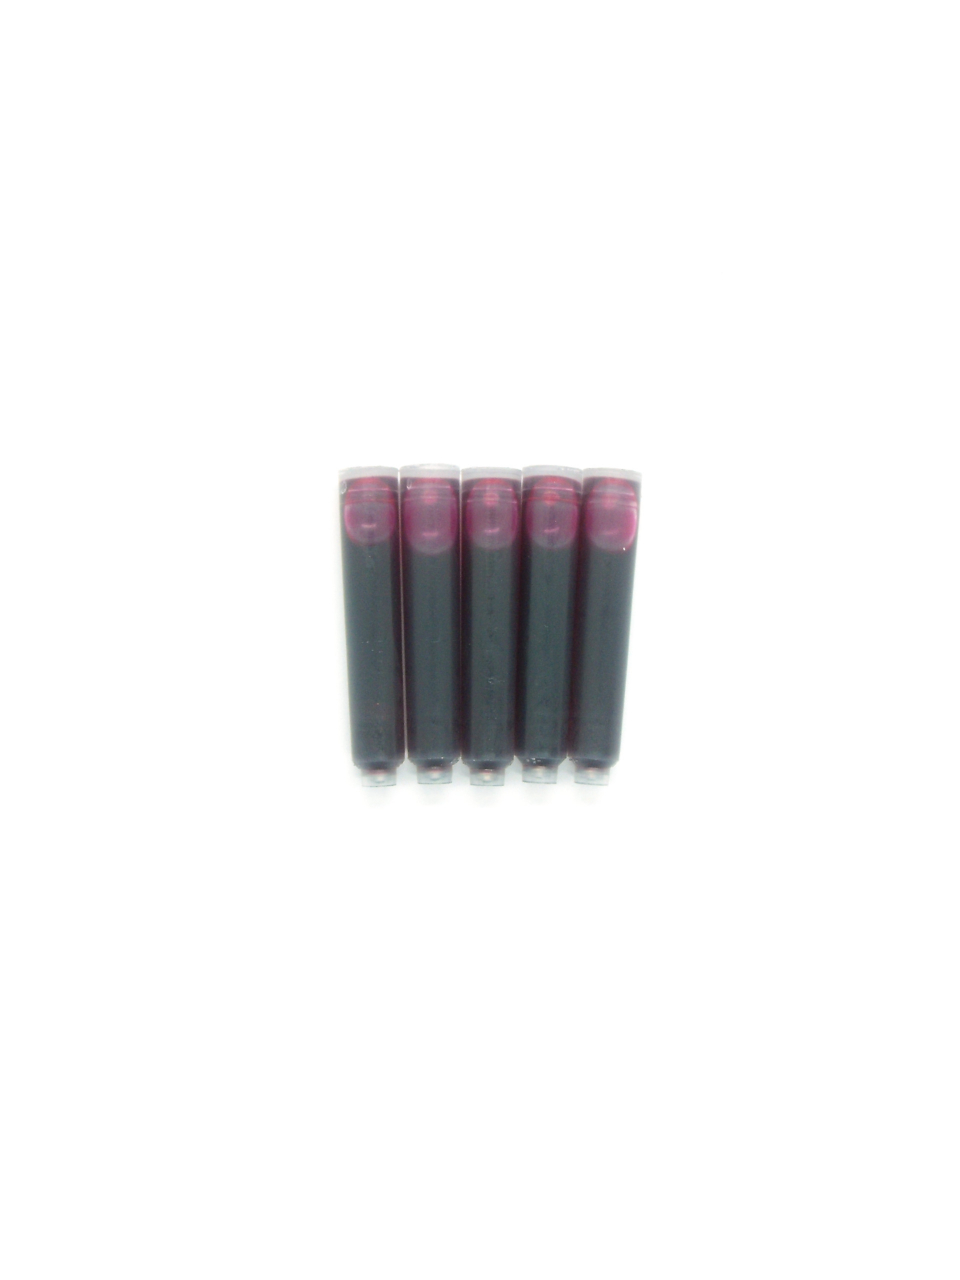 PenConverter Ink Cartridges For Lalex Fountain Pens (Pink)